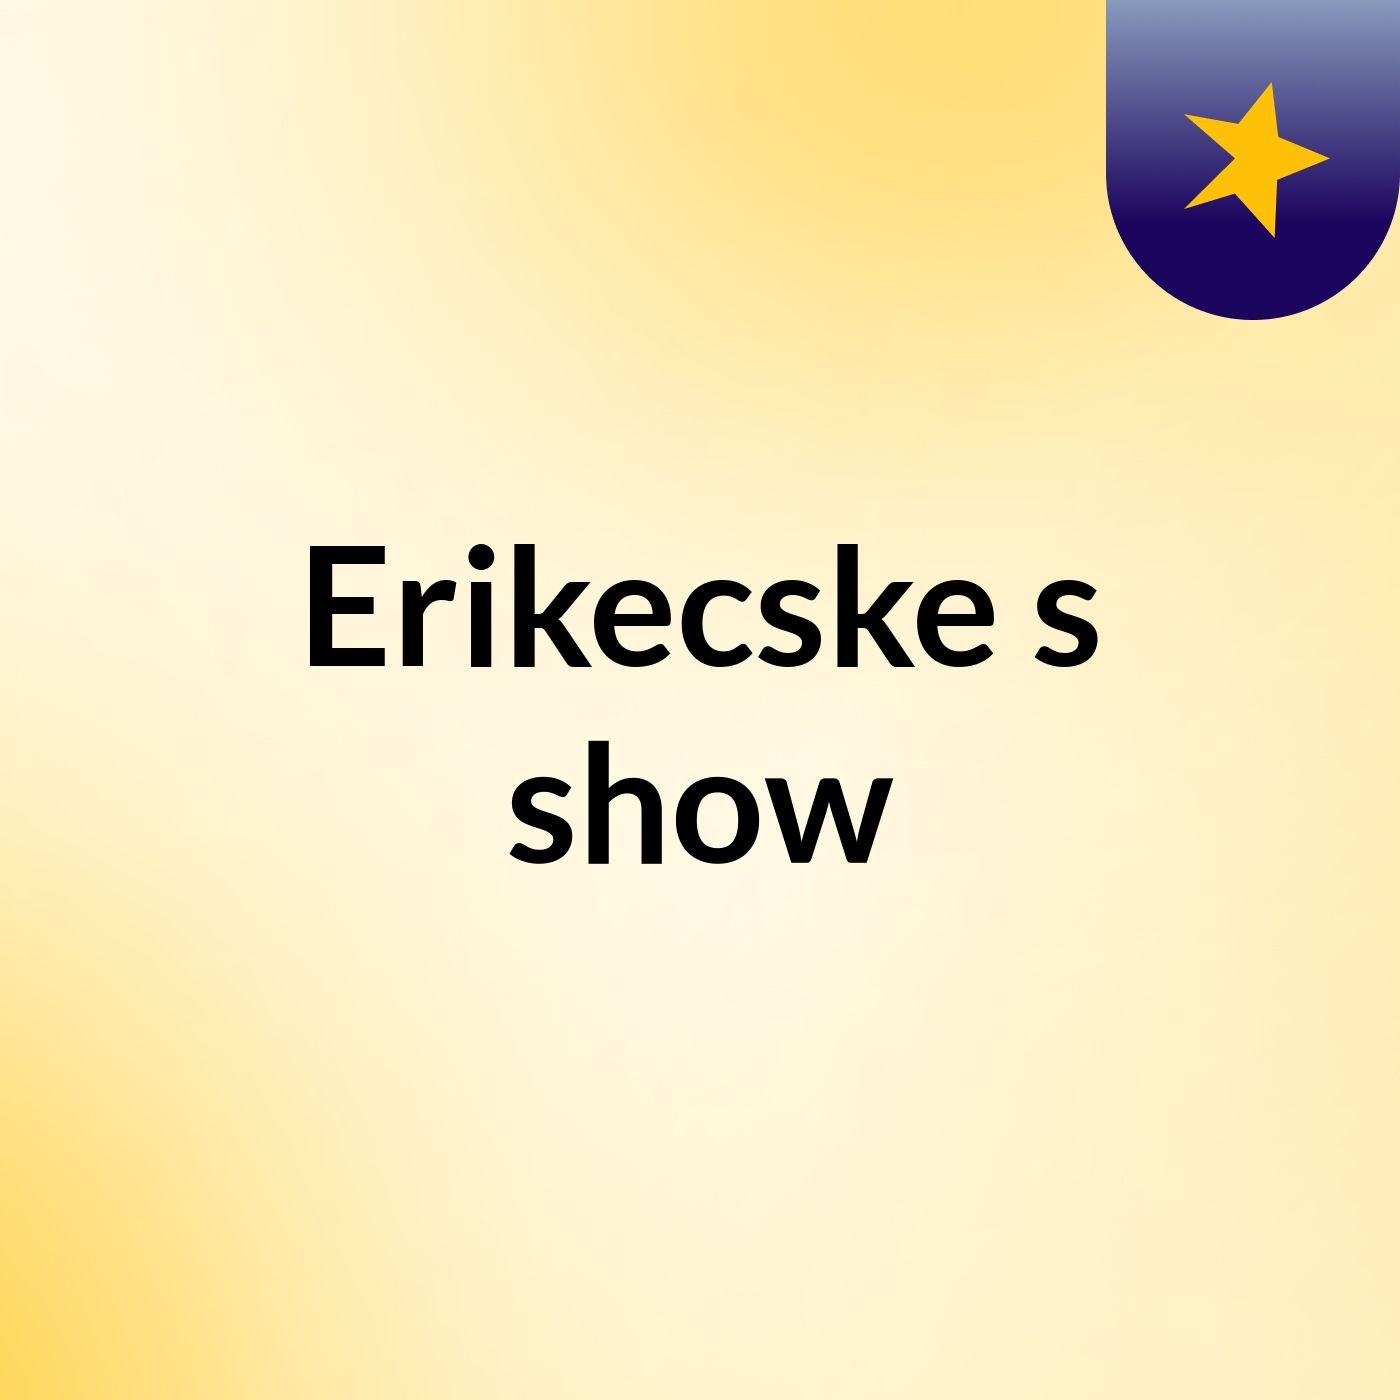 Erikecske's show